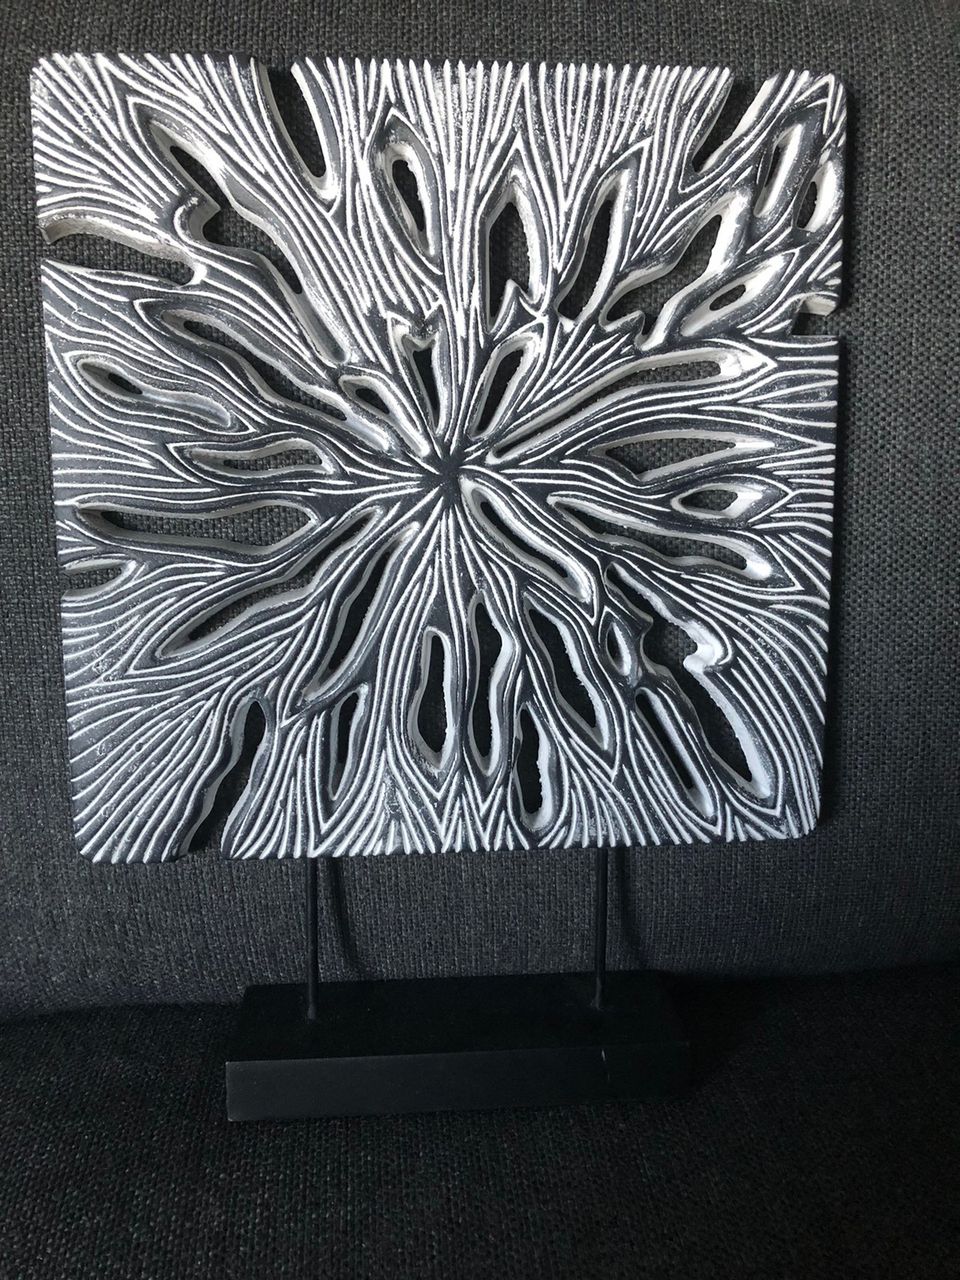 FINNMARI musta/harmaa pöytäkoriste 30 cm x 40 cm